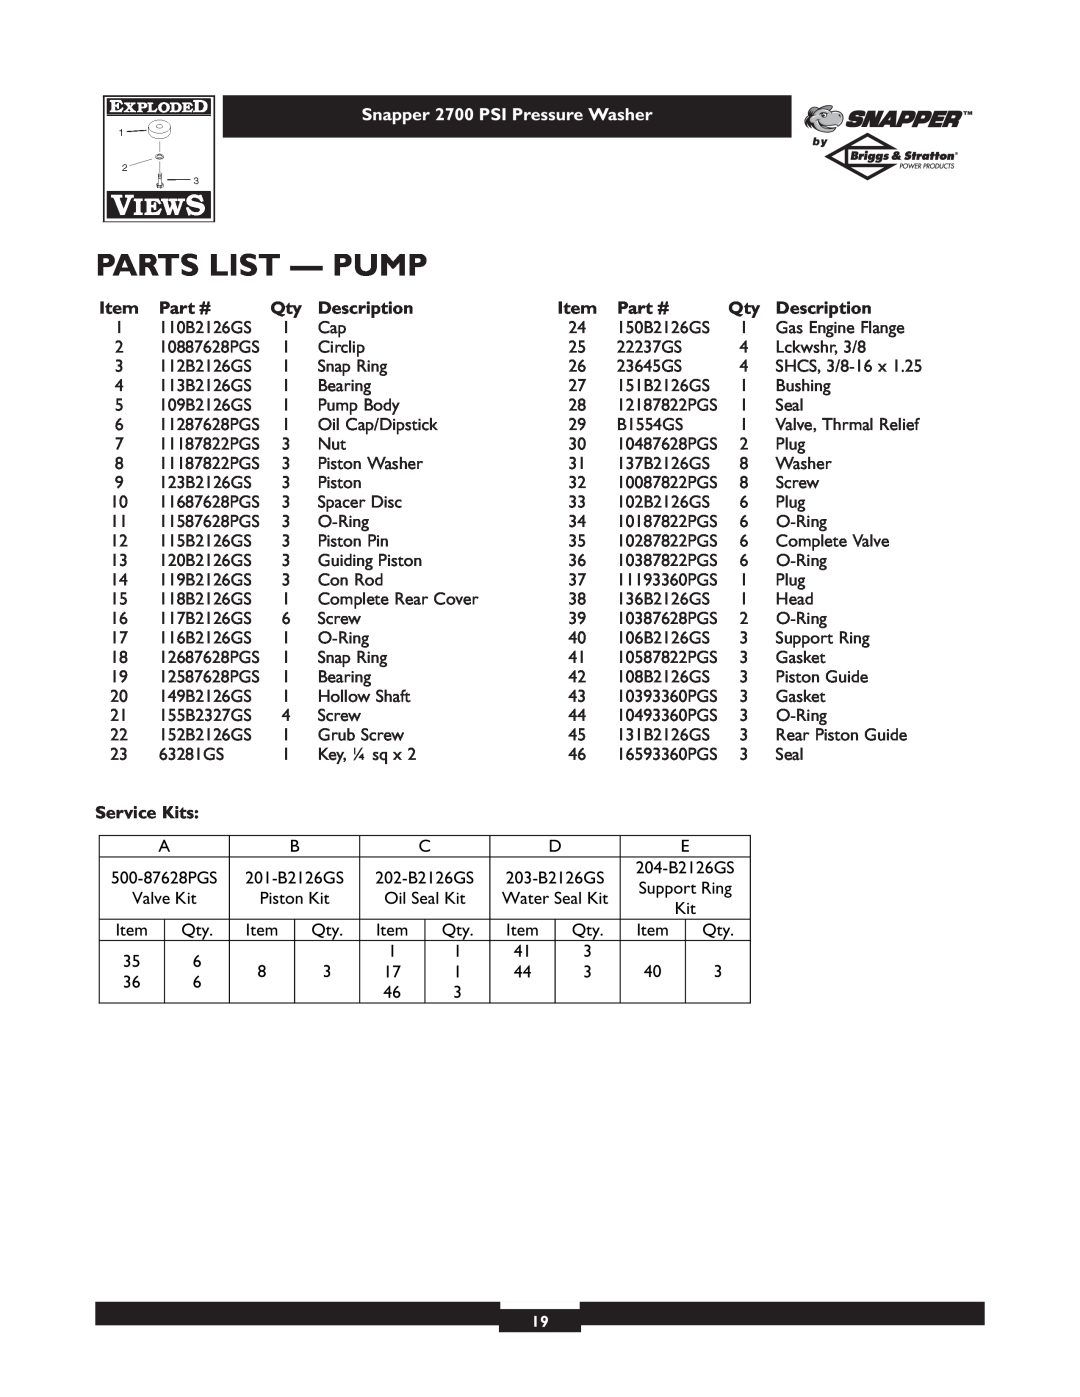 Briggs & Stratton 2700PSI owner manual Parts List - Pump, Service Kits, Snapper 2700 PSI Pressure Washer, Description 